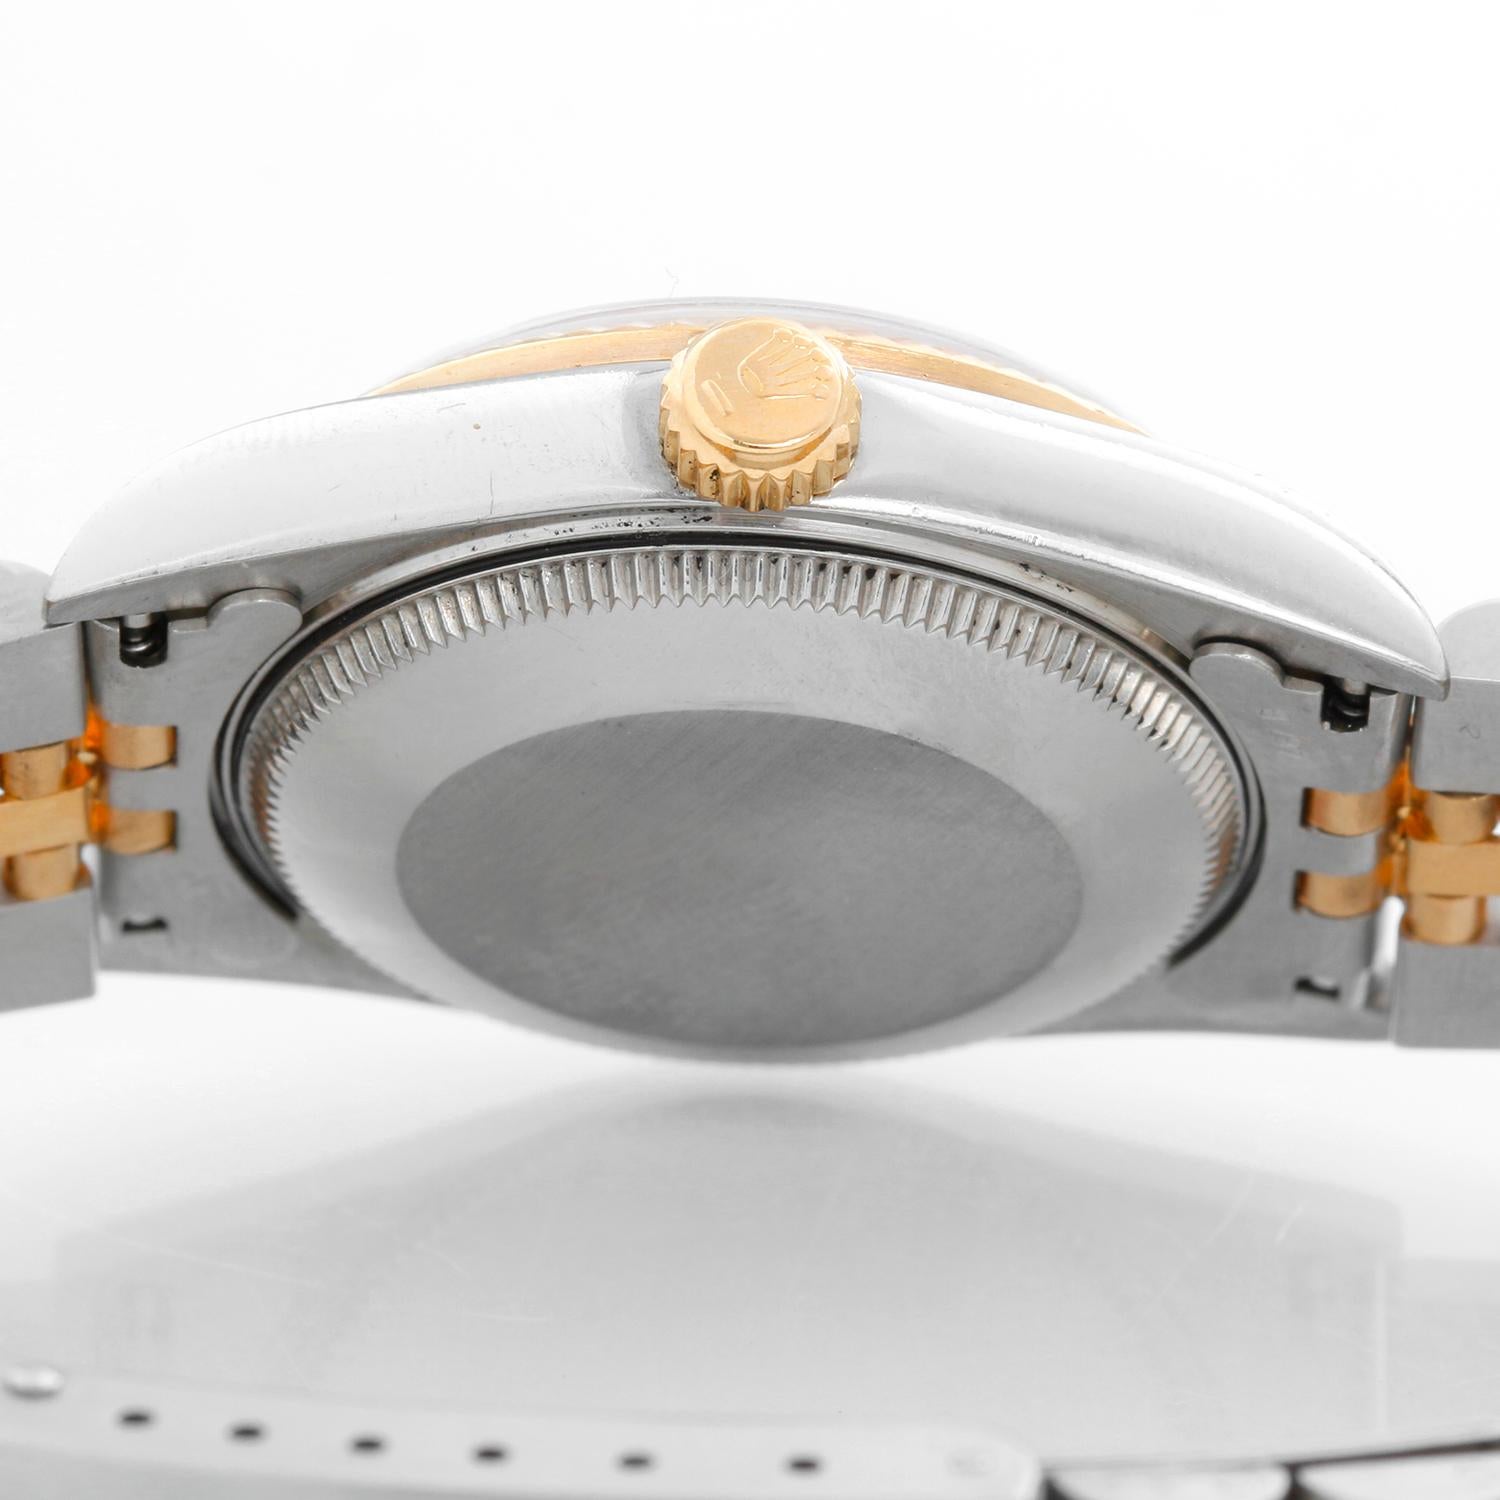 Women's Rolex Datejust Midsize 2-Tone Watch 68273